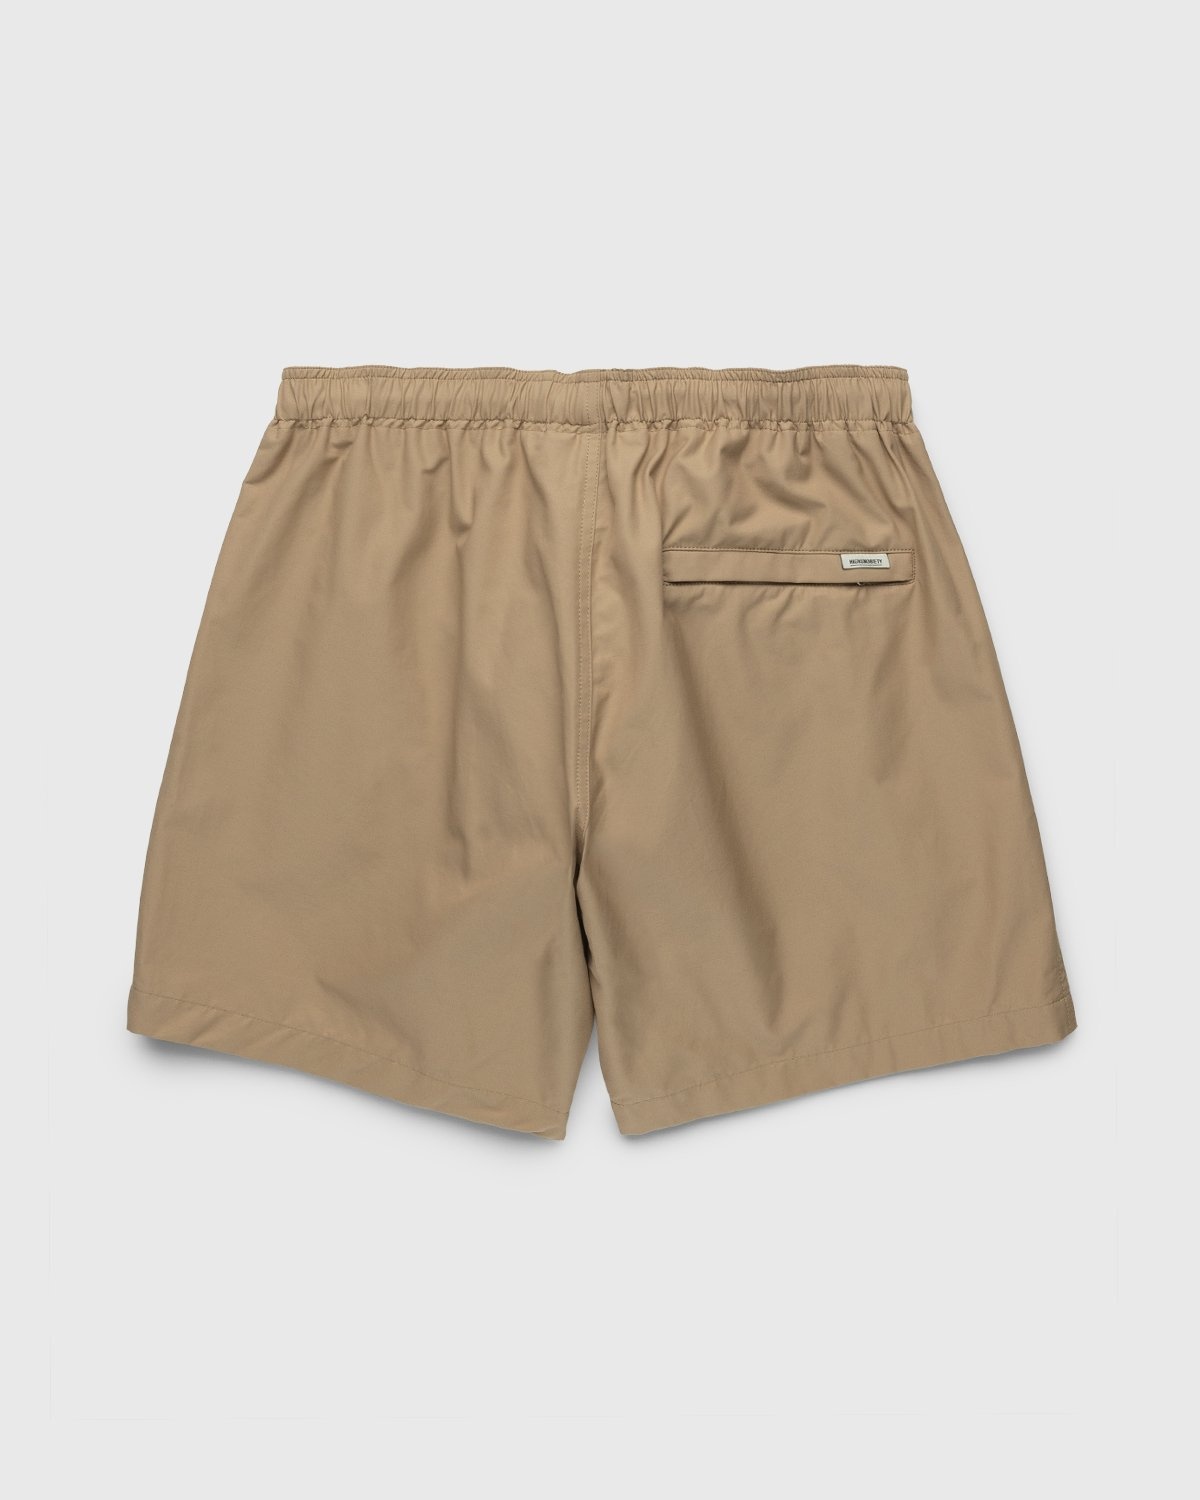 Highsnobiety – Cotton Nylon Water Shorts Beige - Active Shorts - Beige - Image 2